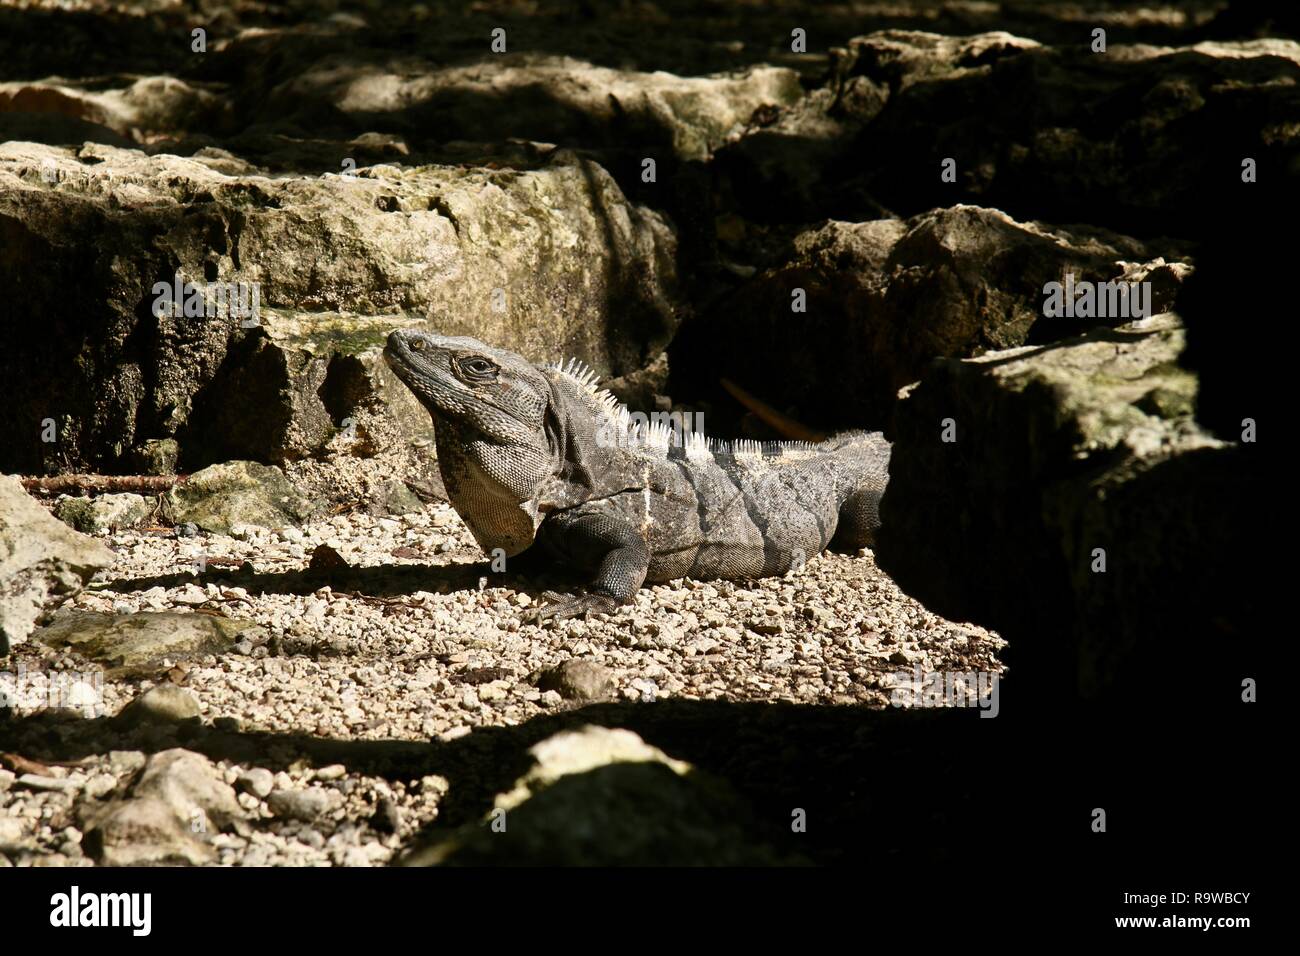 An iguana sunning itself near rocks in Mexico Stock Photo